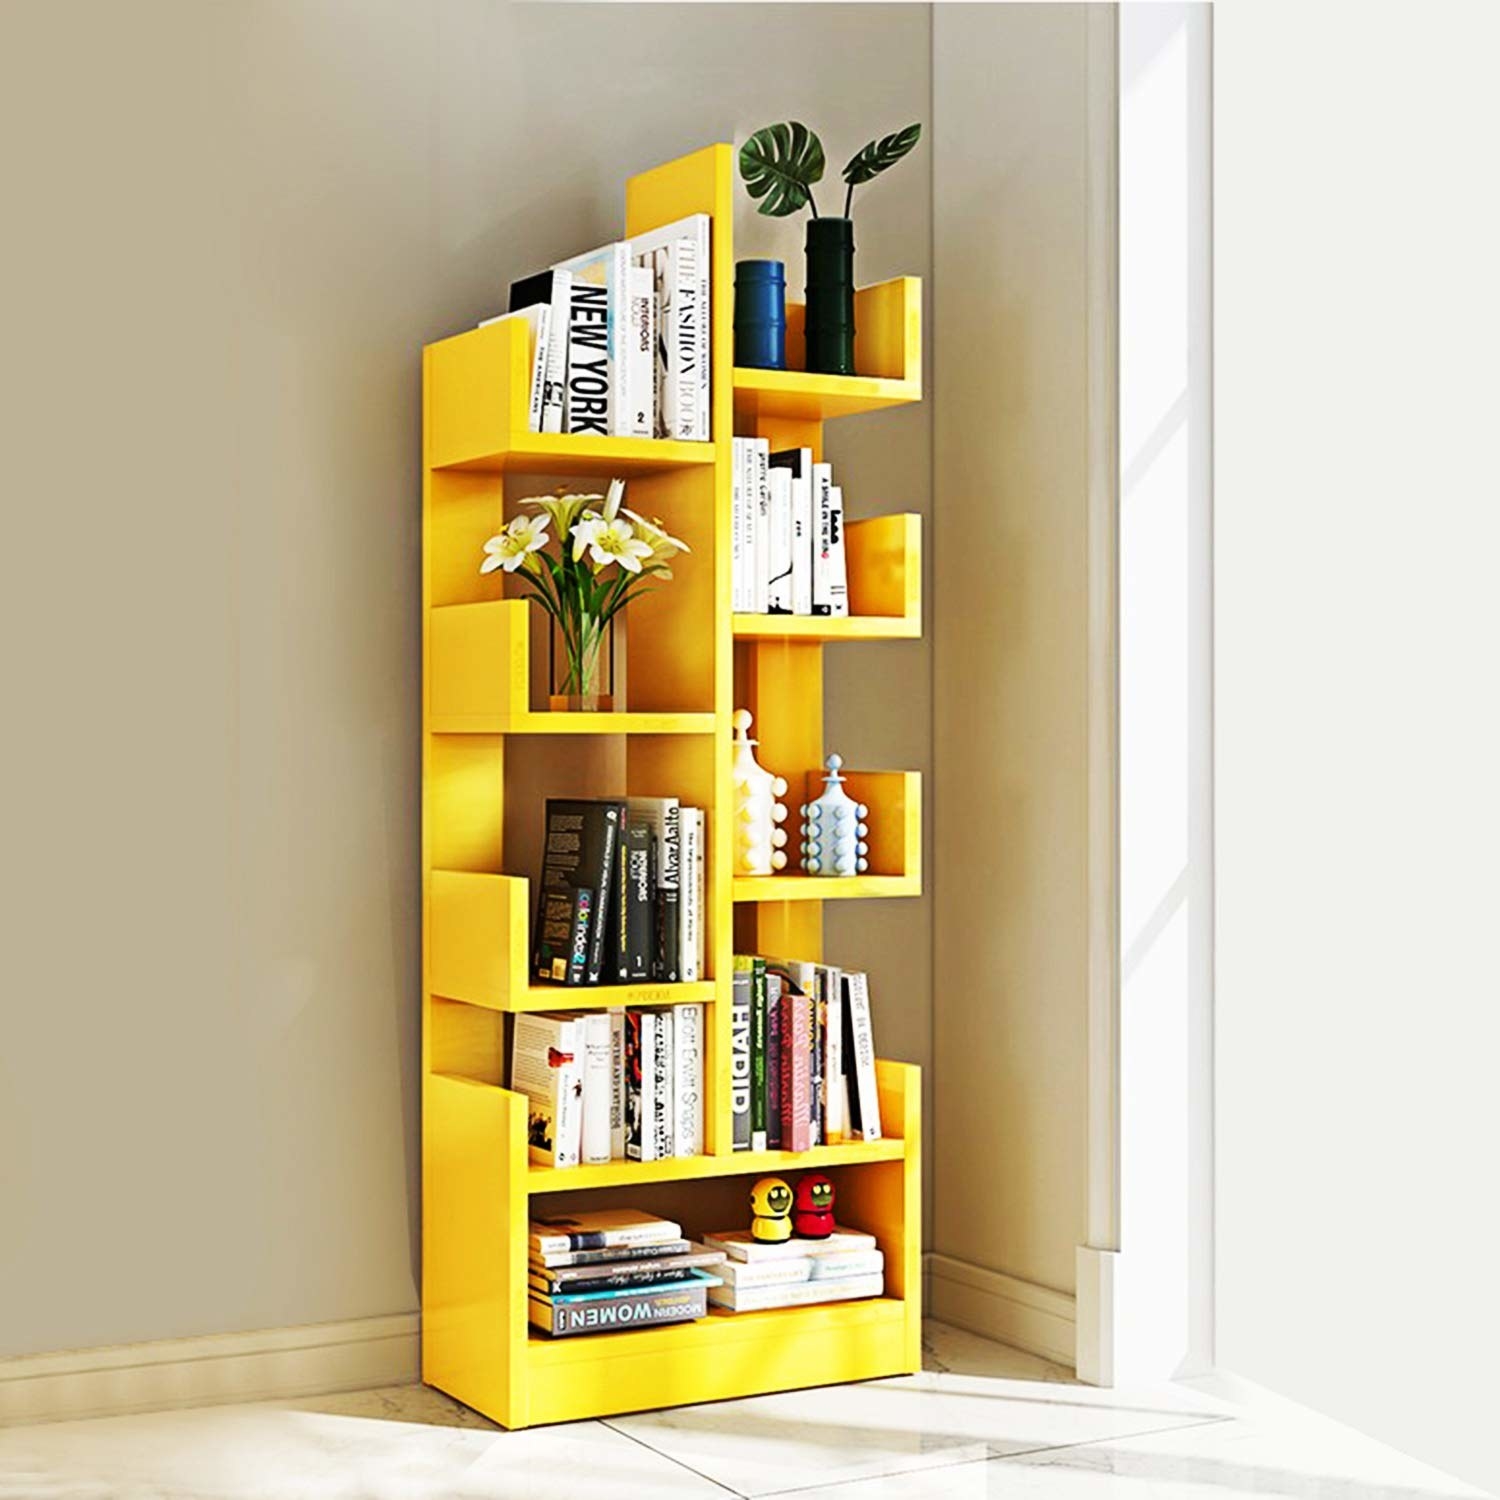 A yellow bookshelf 